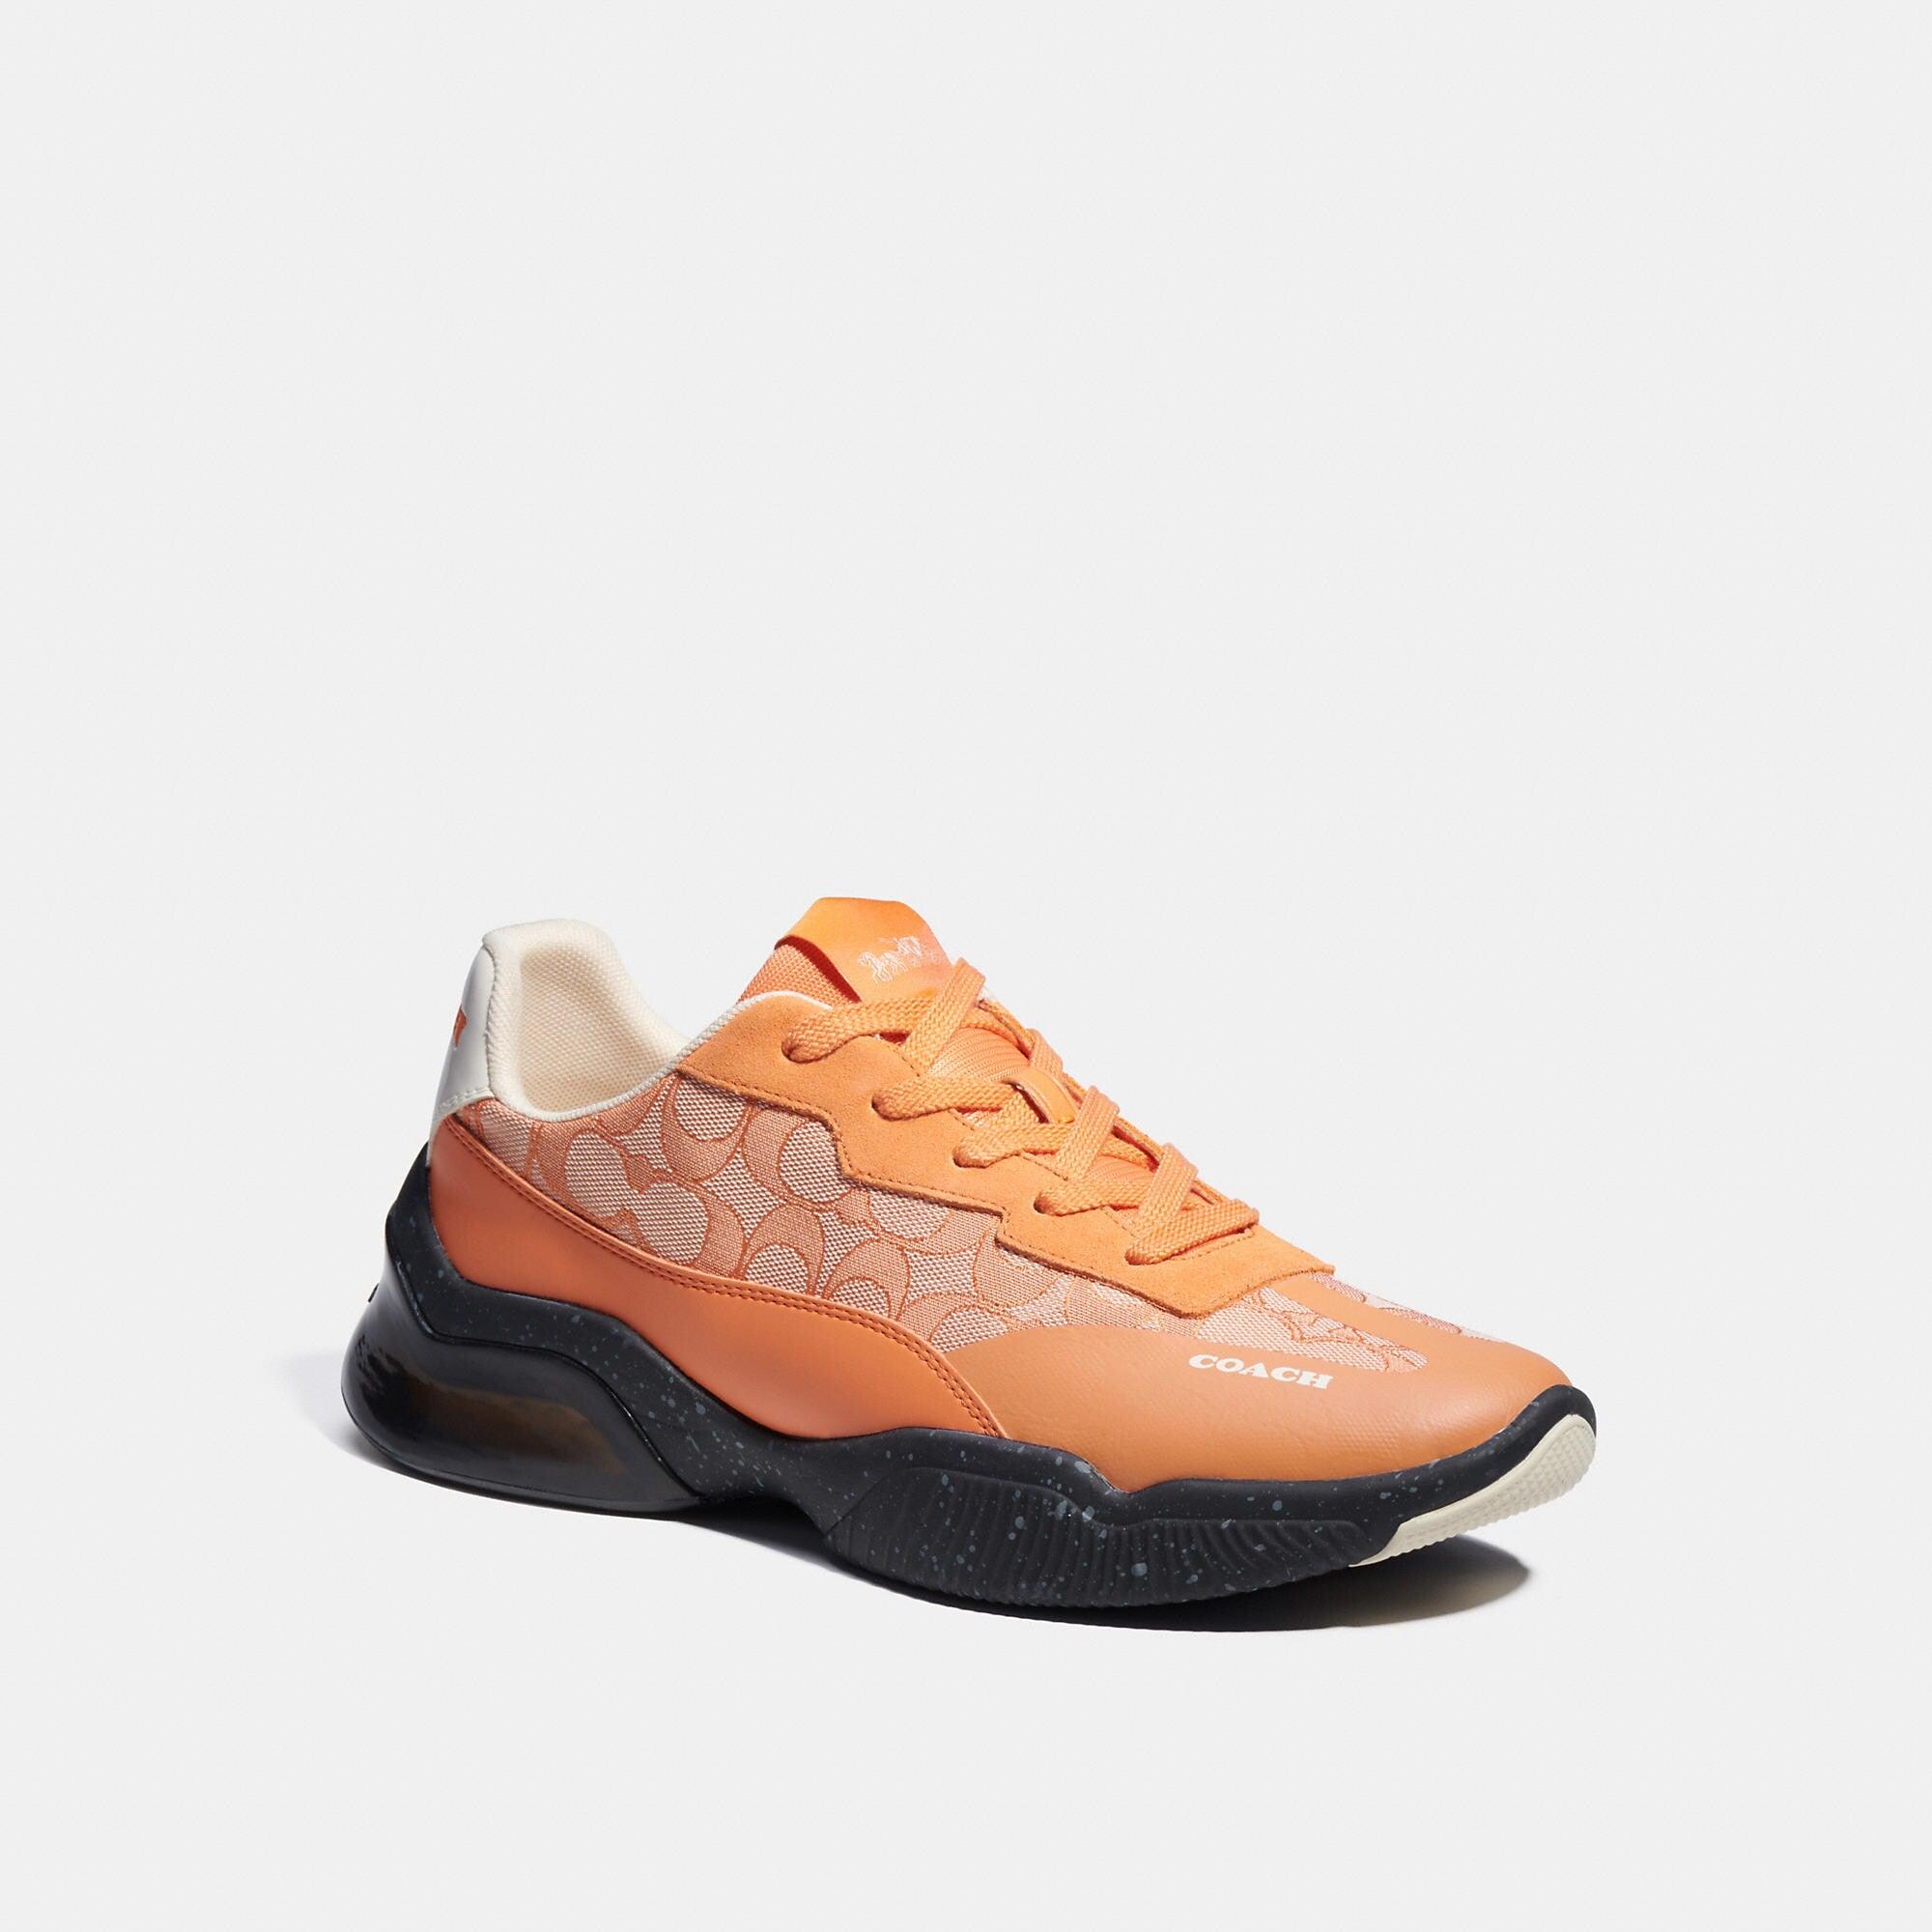 Introducir 58+ imagen coach orange shoes